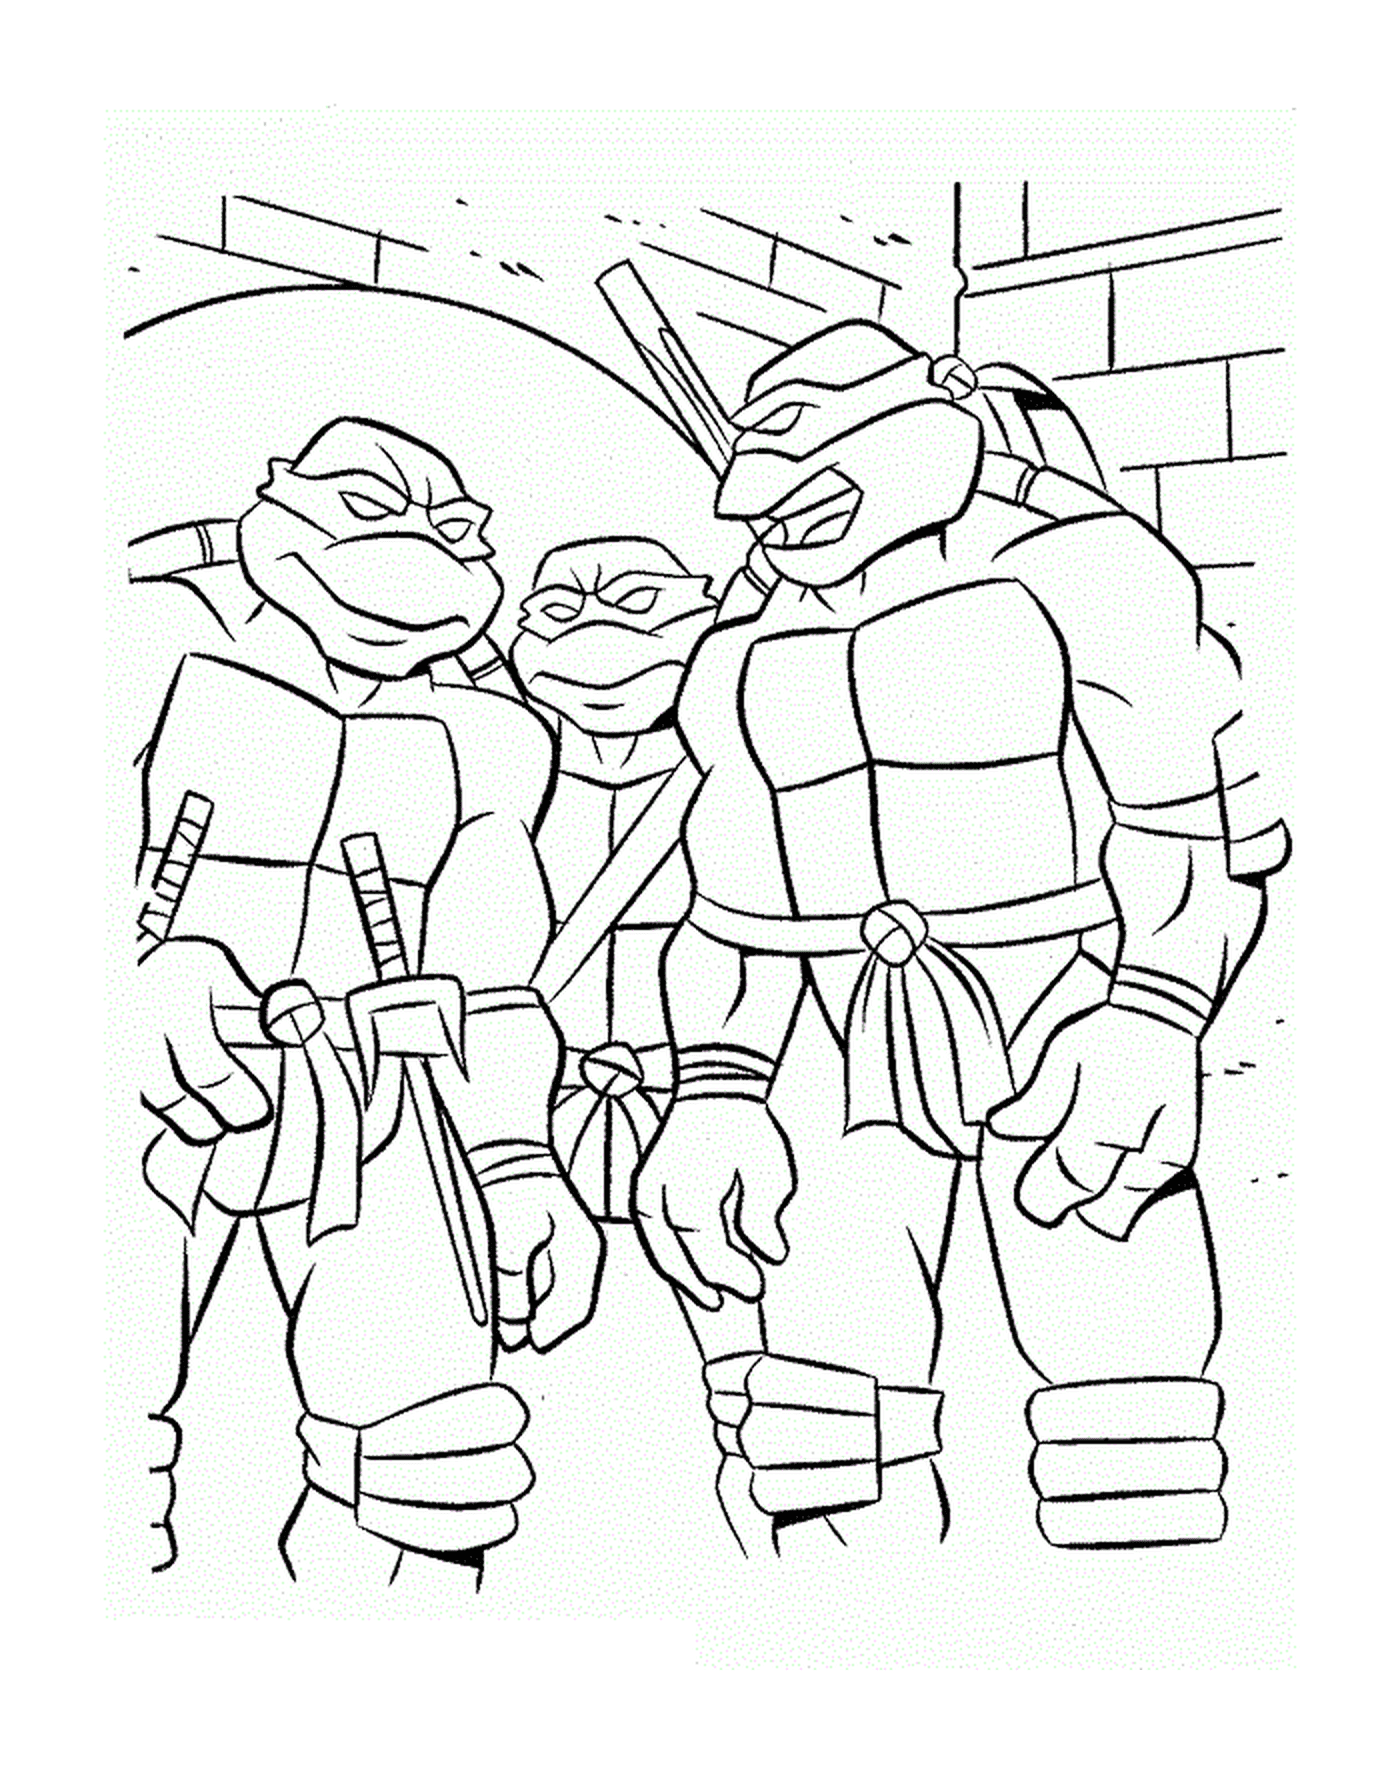  Equipe de Tartarugas Ninja 